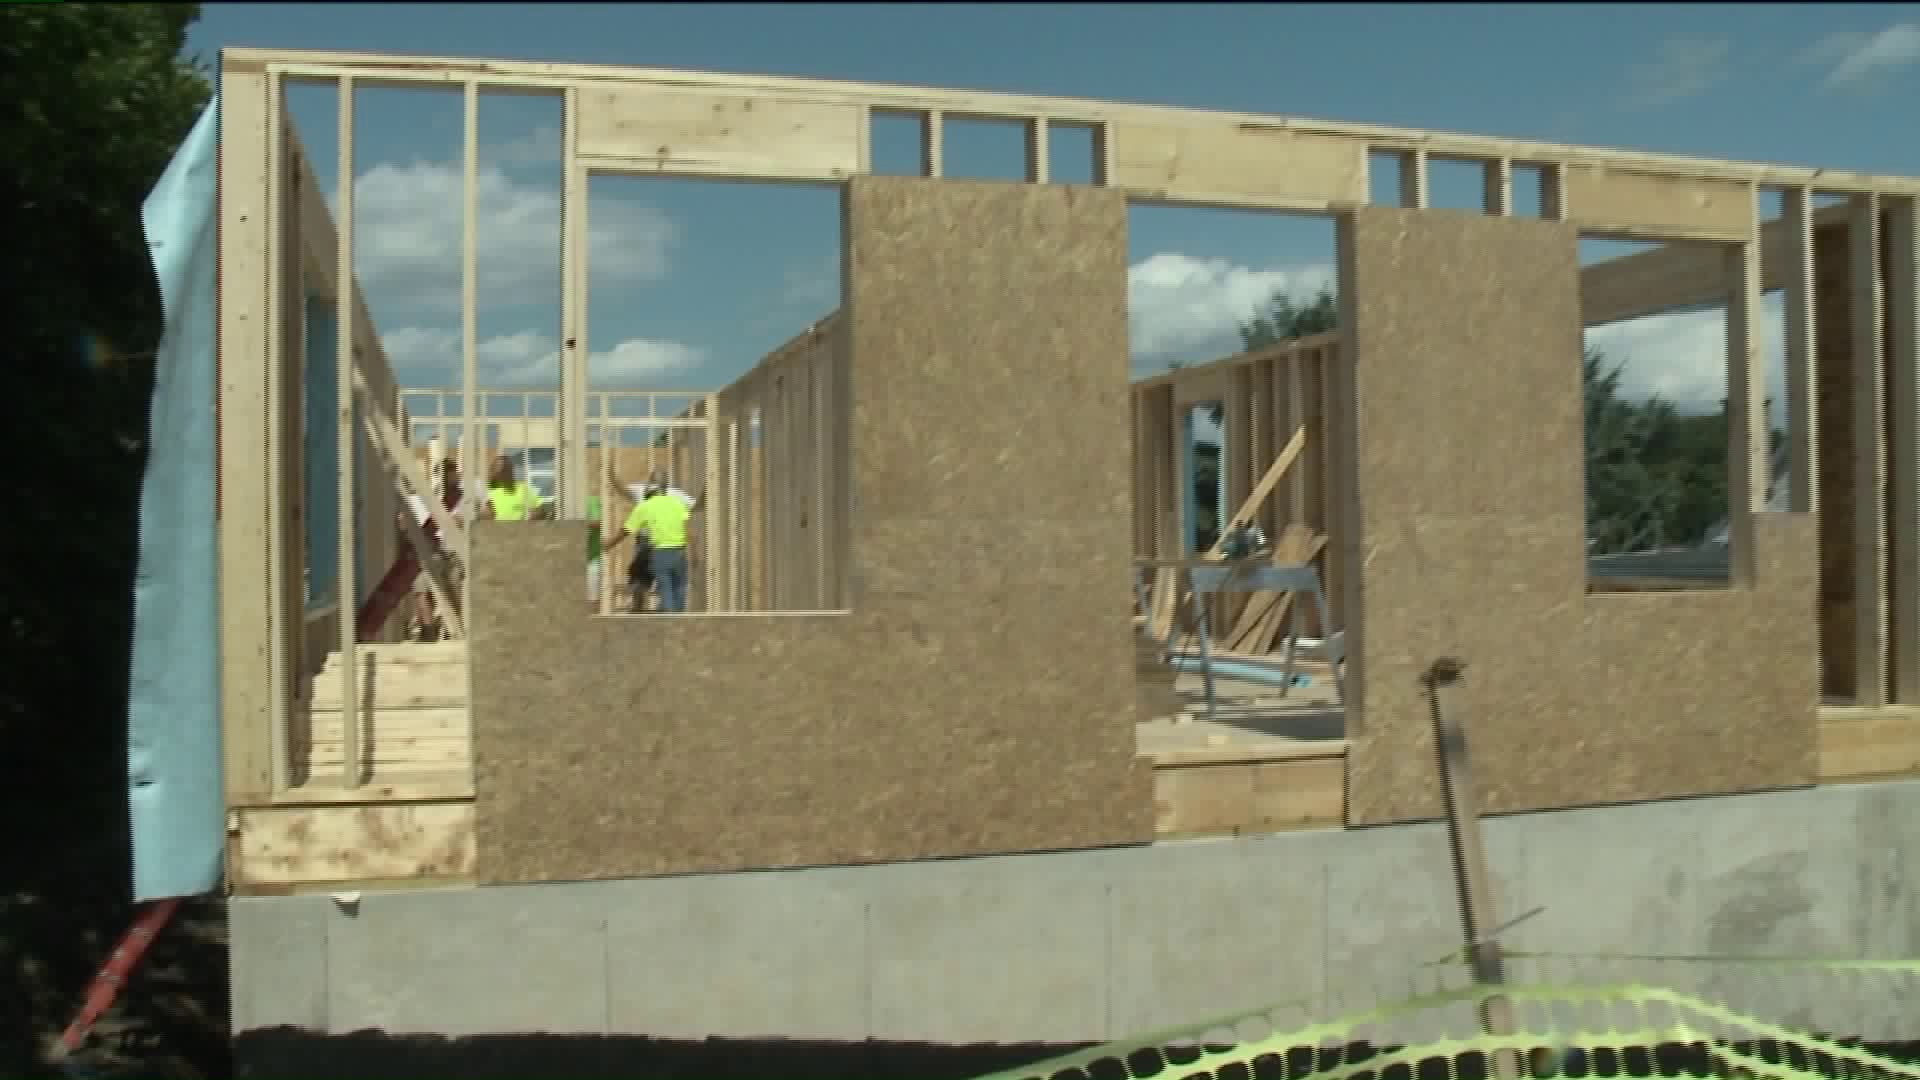 Volunteers Help Build Home in Pittston with Habitat for Humanity